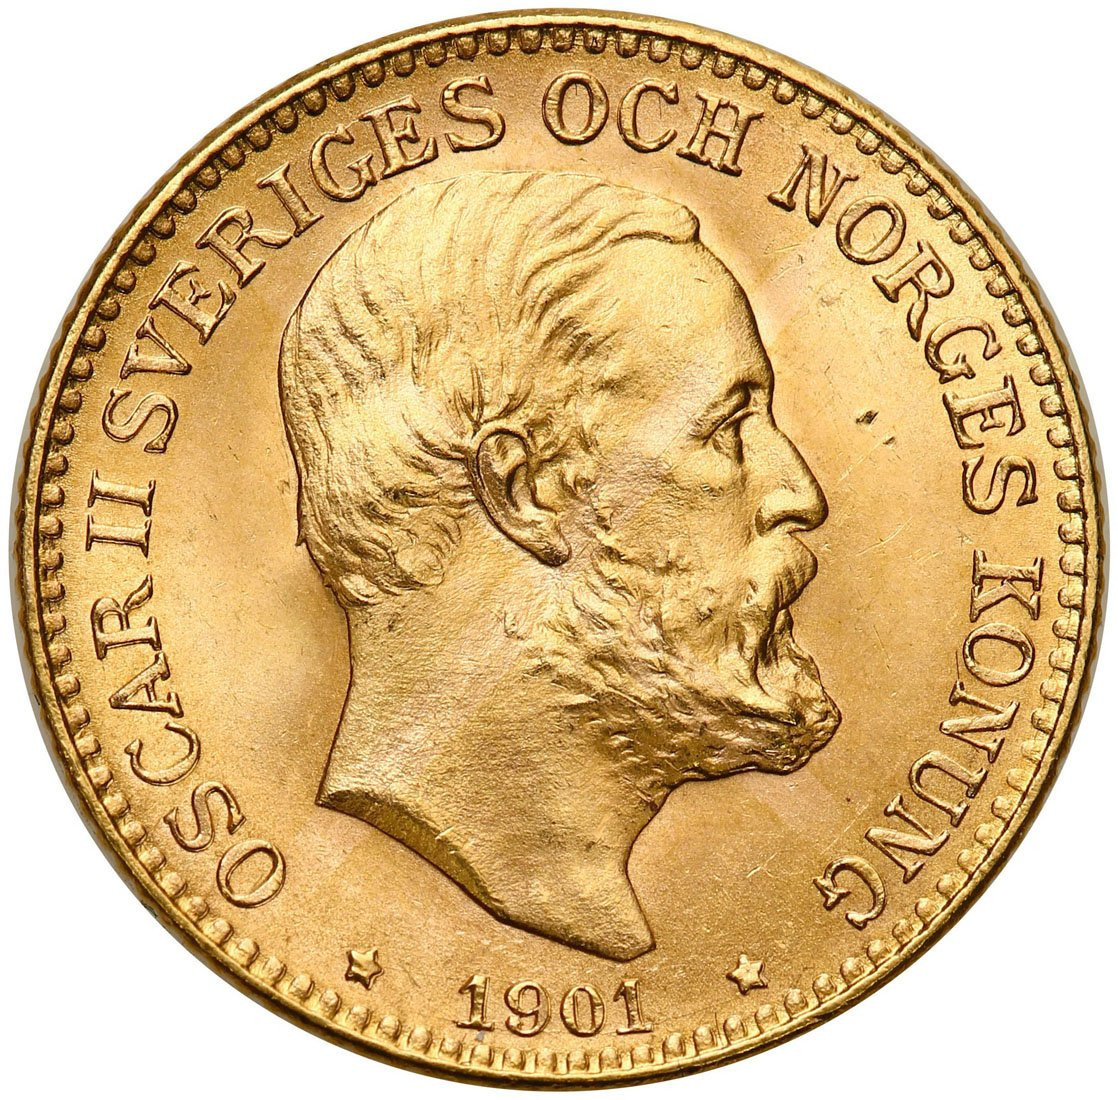 Szwecja. 10 koron (Kronor) 1901 Oskar II - PIĘKNE